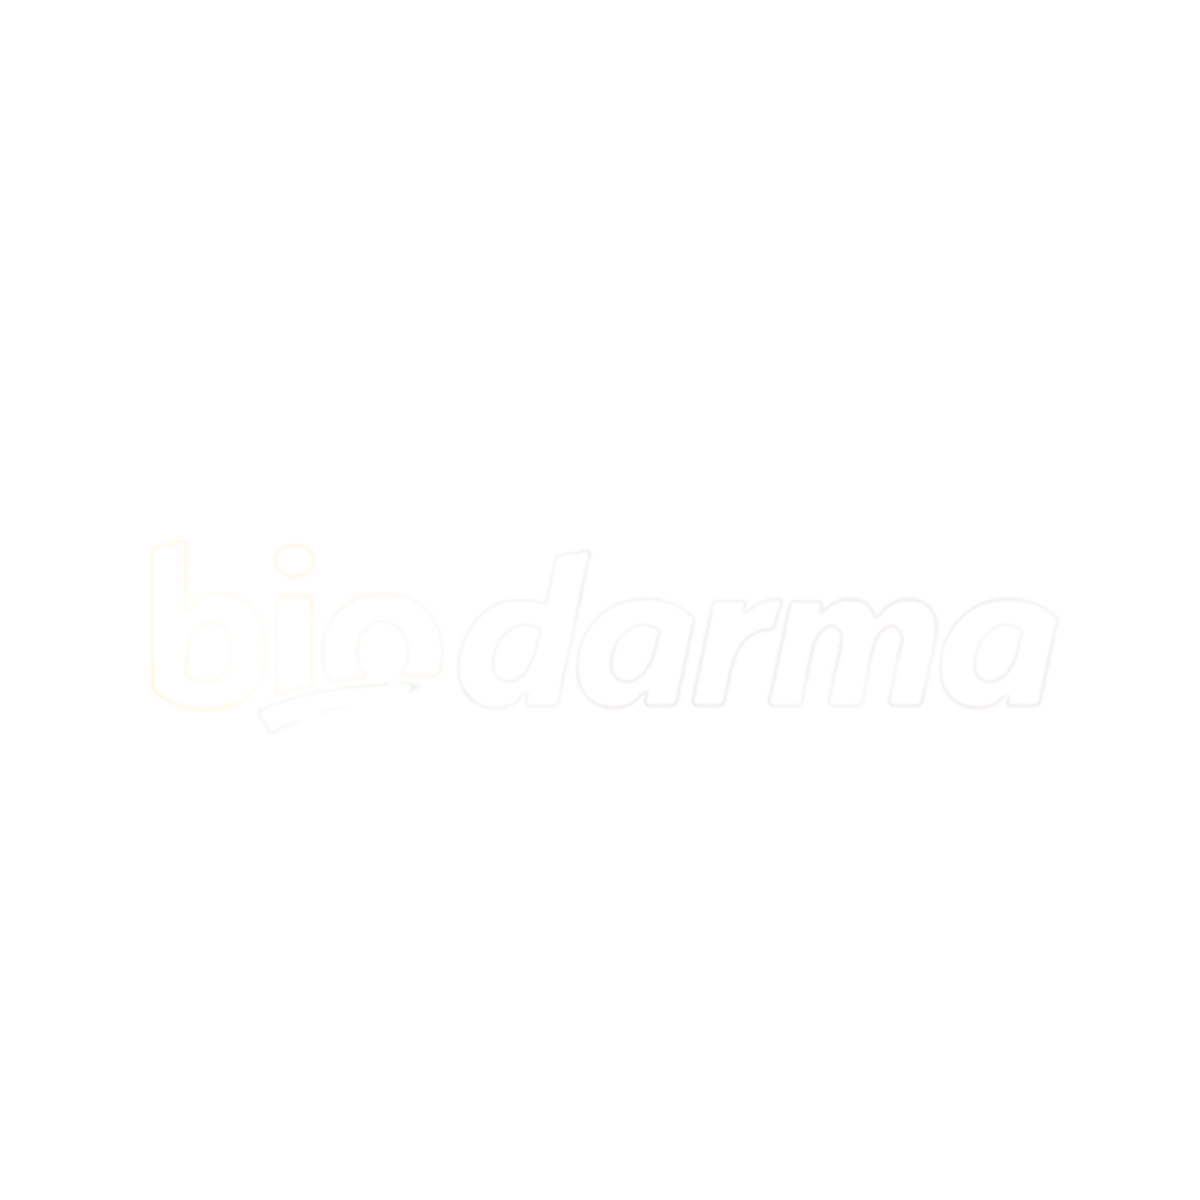 Biodarma company logo